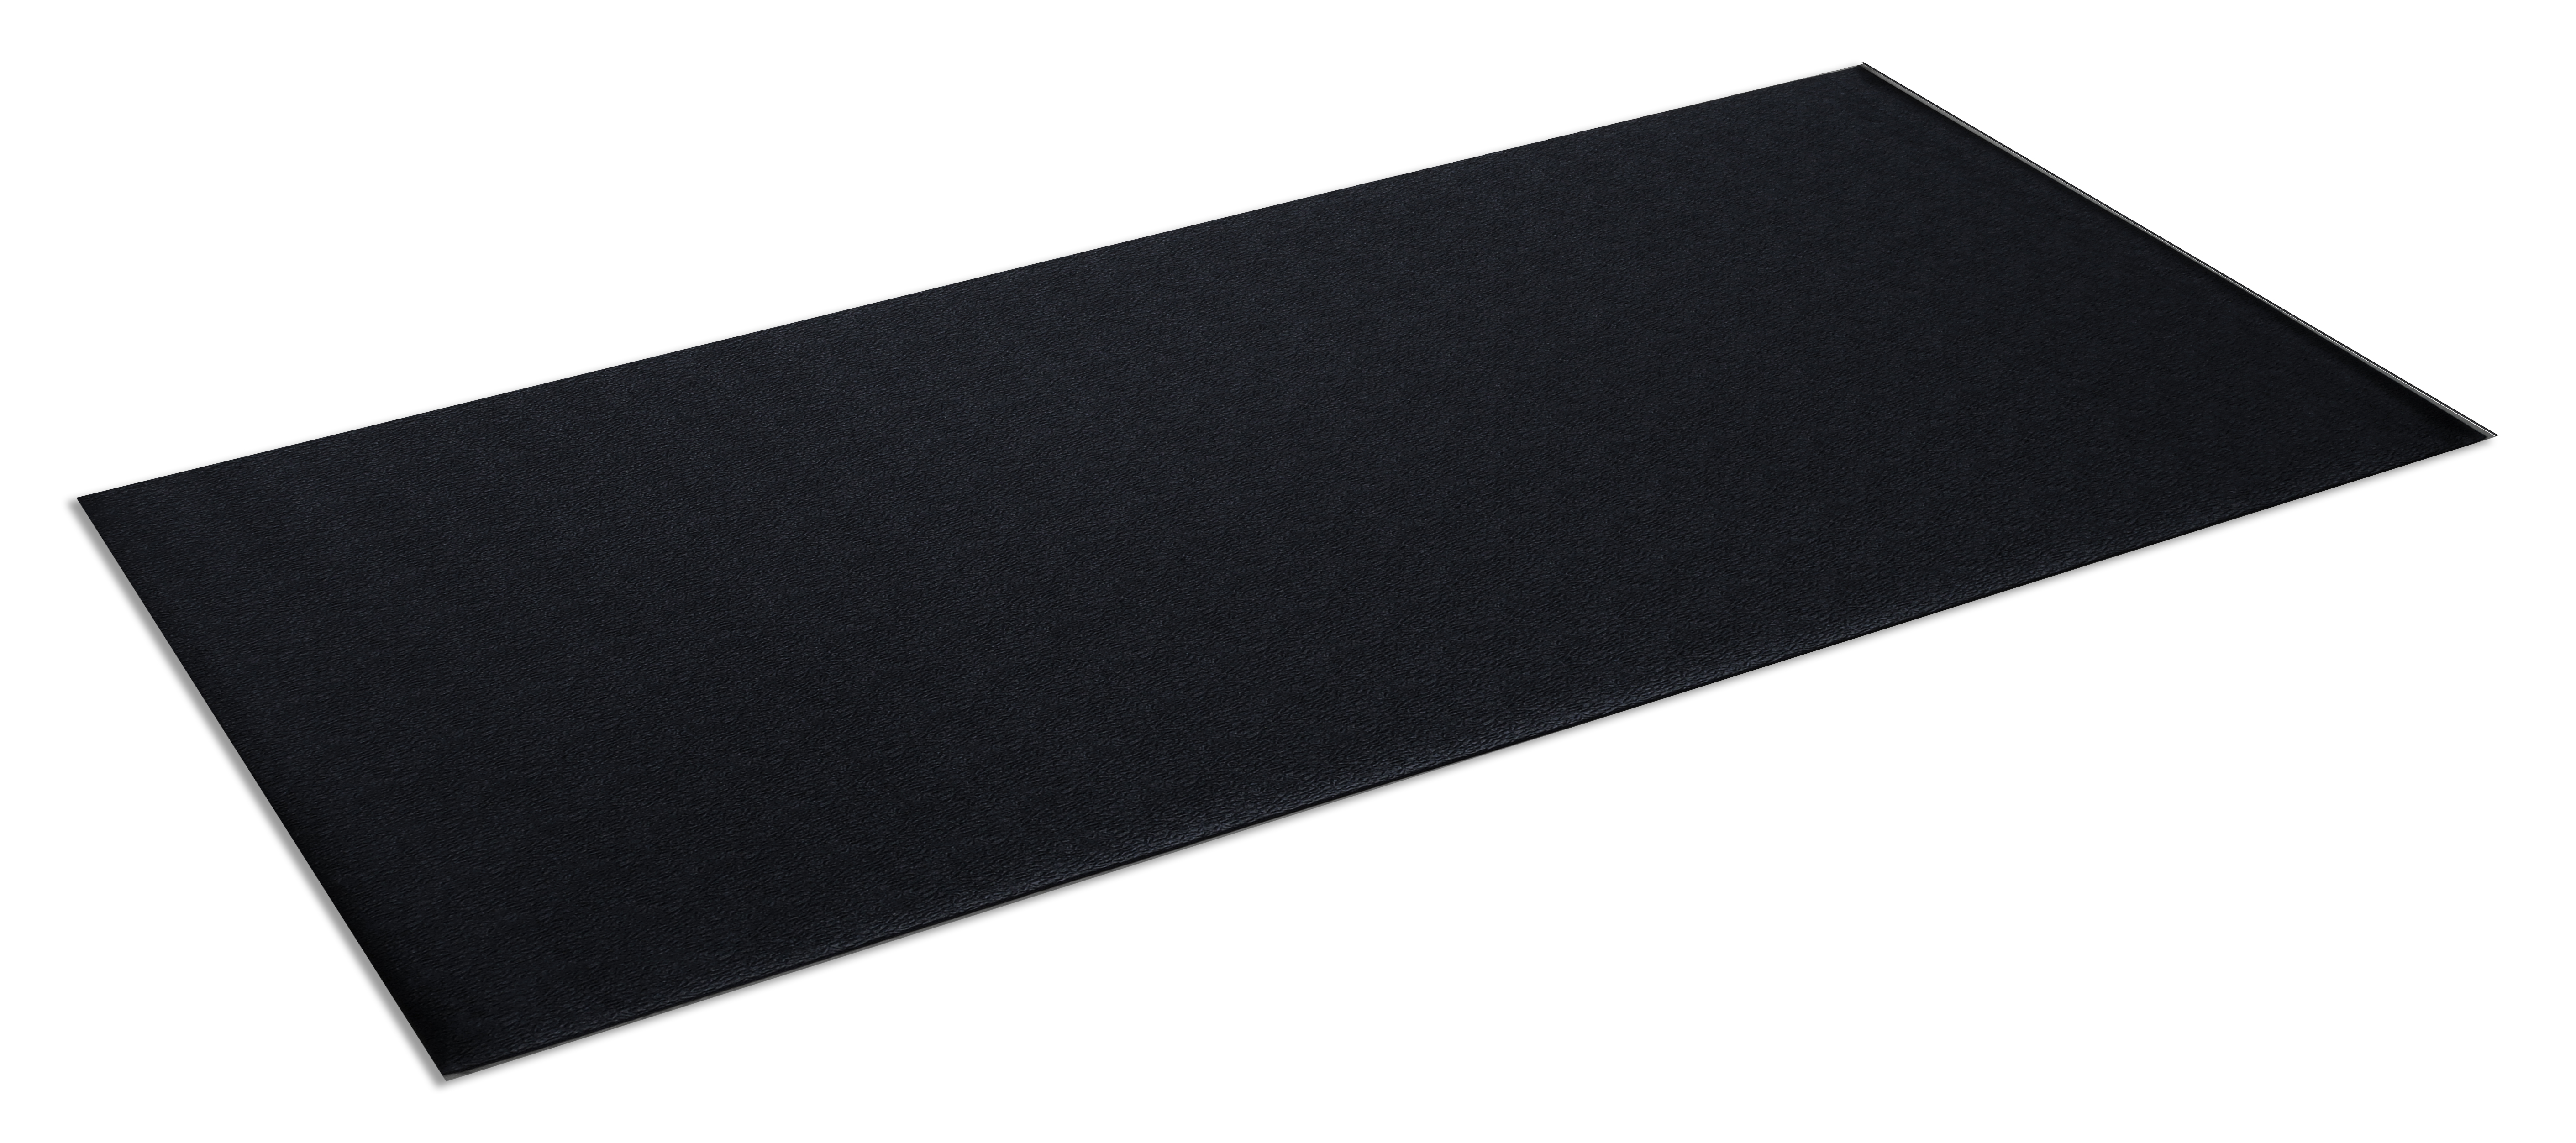 SuperMats - Treadmill Mat - Standard Quality Dense Foam Vinyl - Fitness Equipment Mat, Black, 30 In. x 72 In. - image 1 of 4